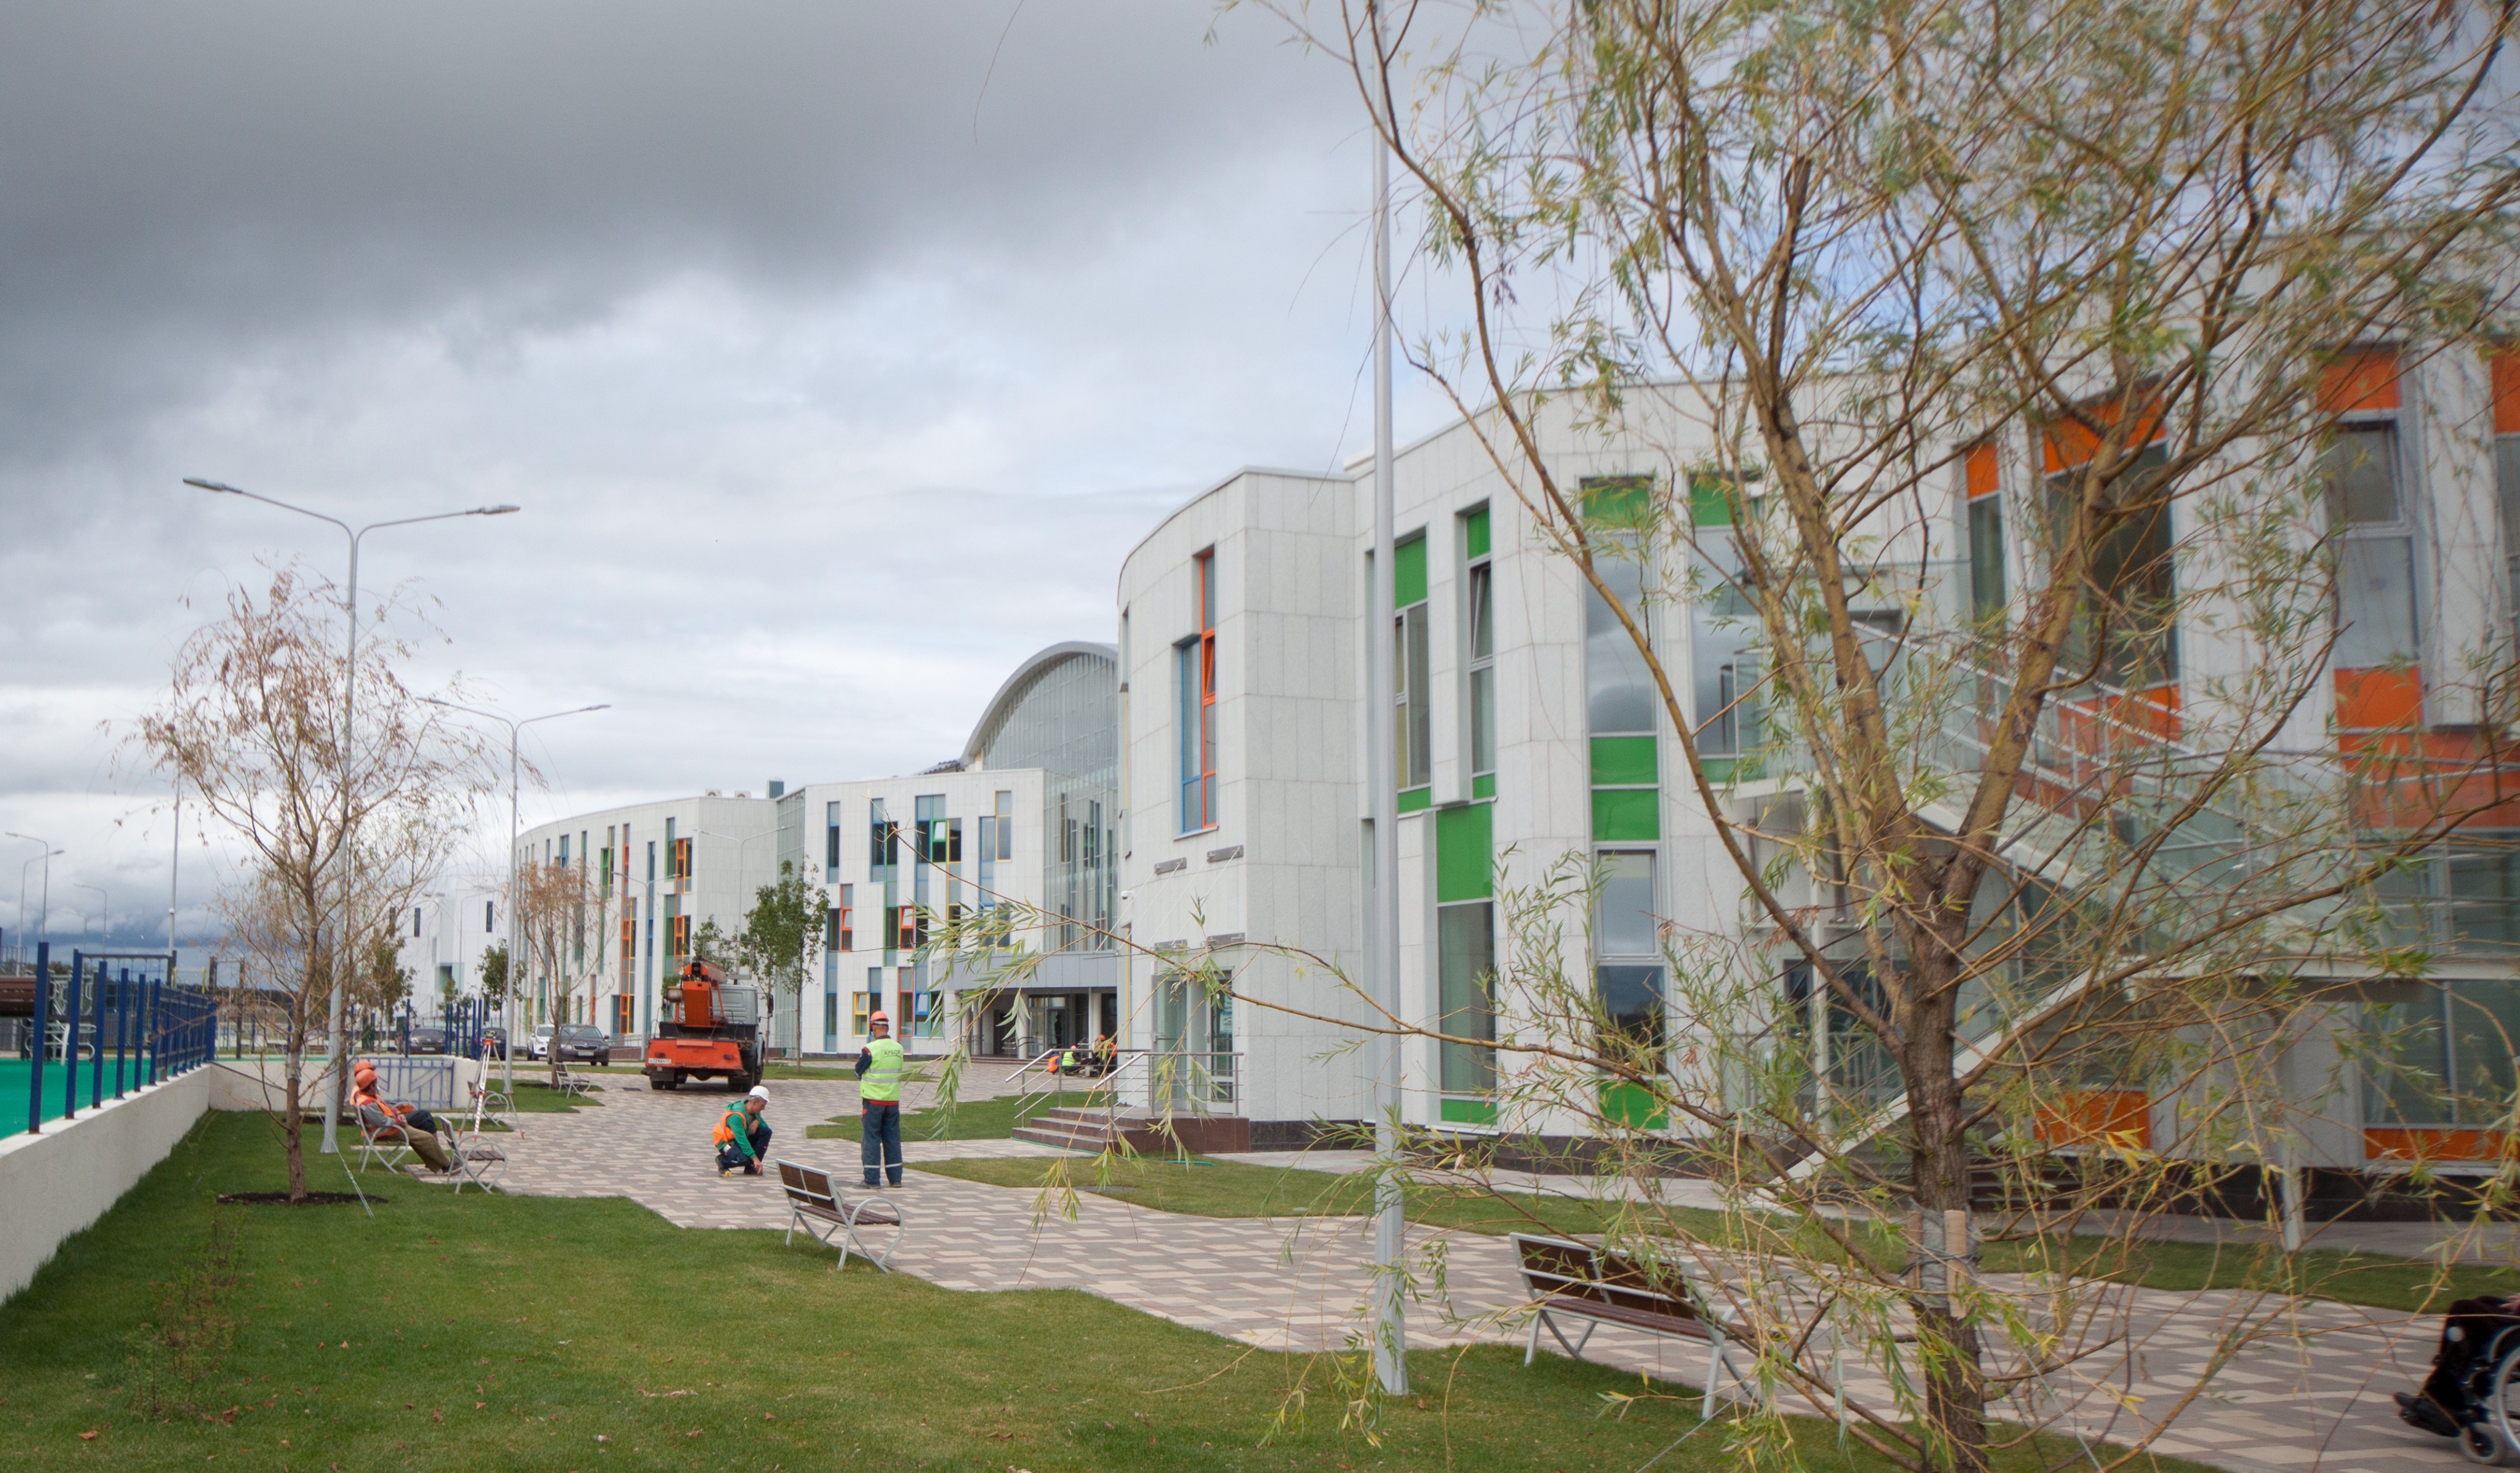 Skolkovo International school. The first K12 school to be built in Russia. School for 480 and kindergarten for 150-4